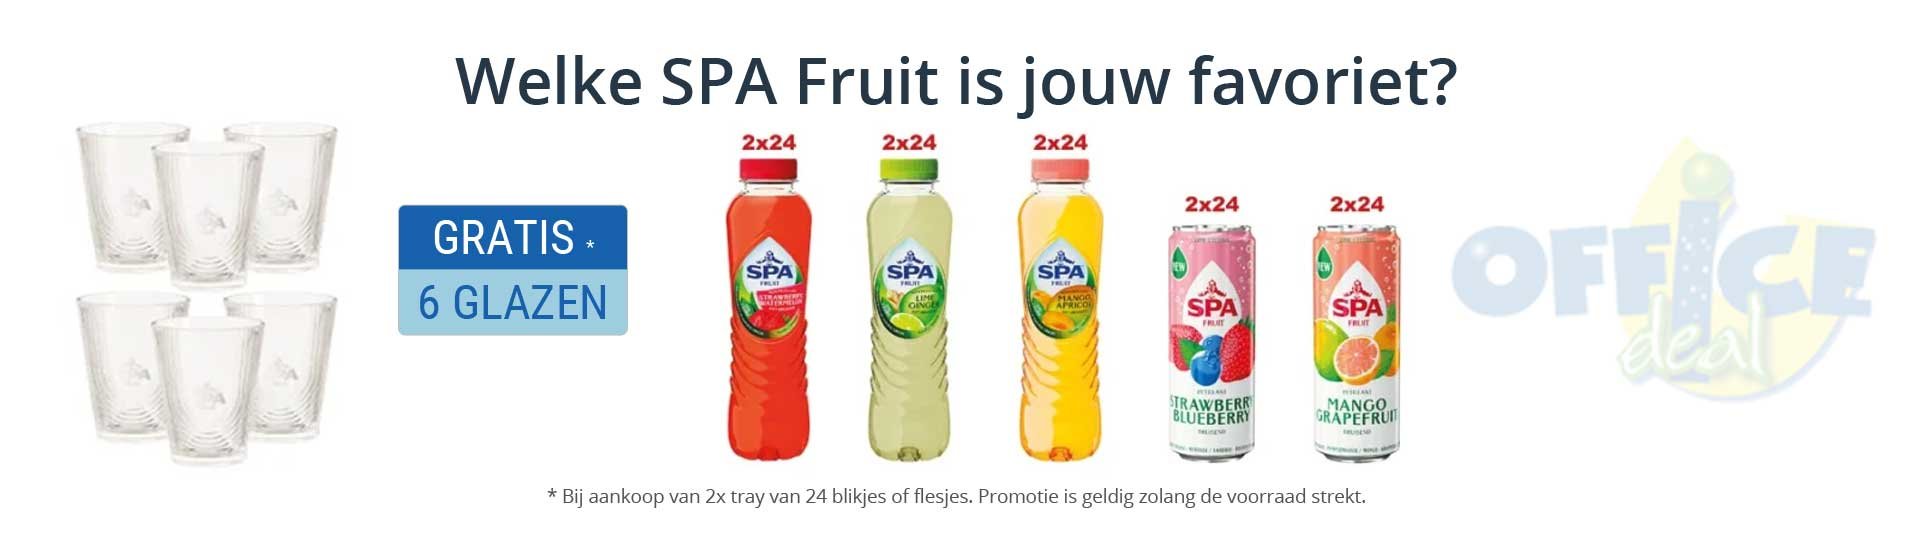 Soa Fruit aanbieding | oxeurope.nl